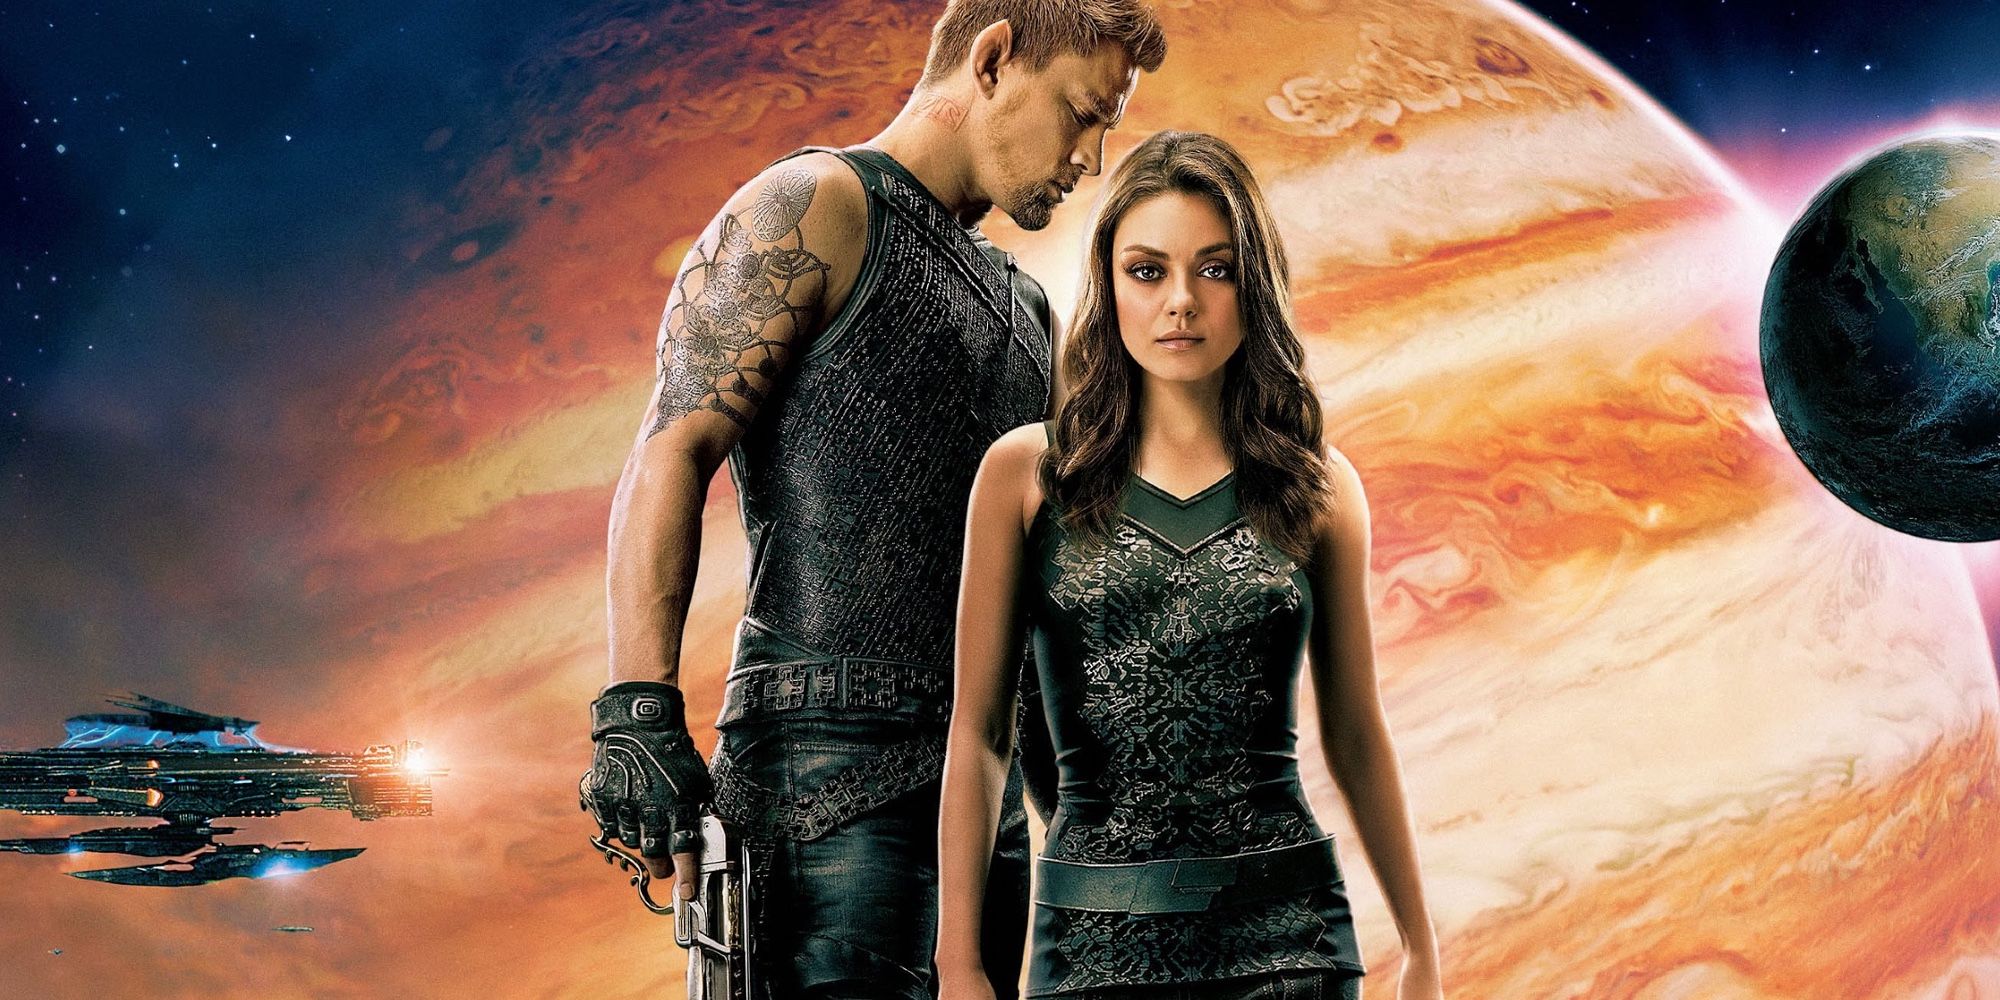 Channing Tatum and Mila Kunis in the poster for Jupiter Ascending